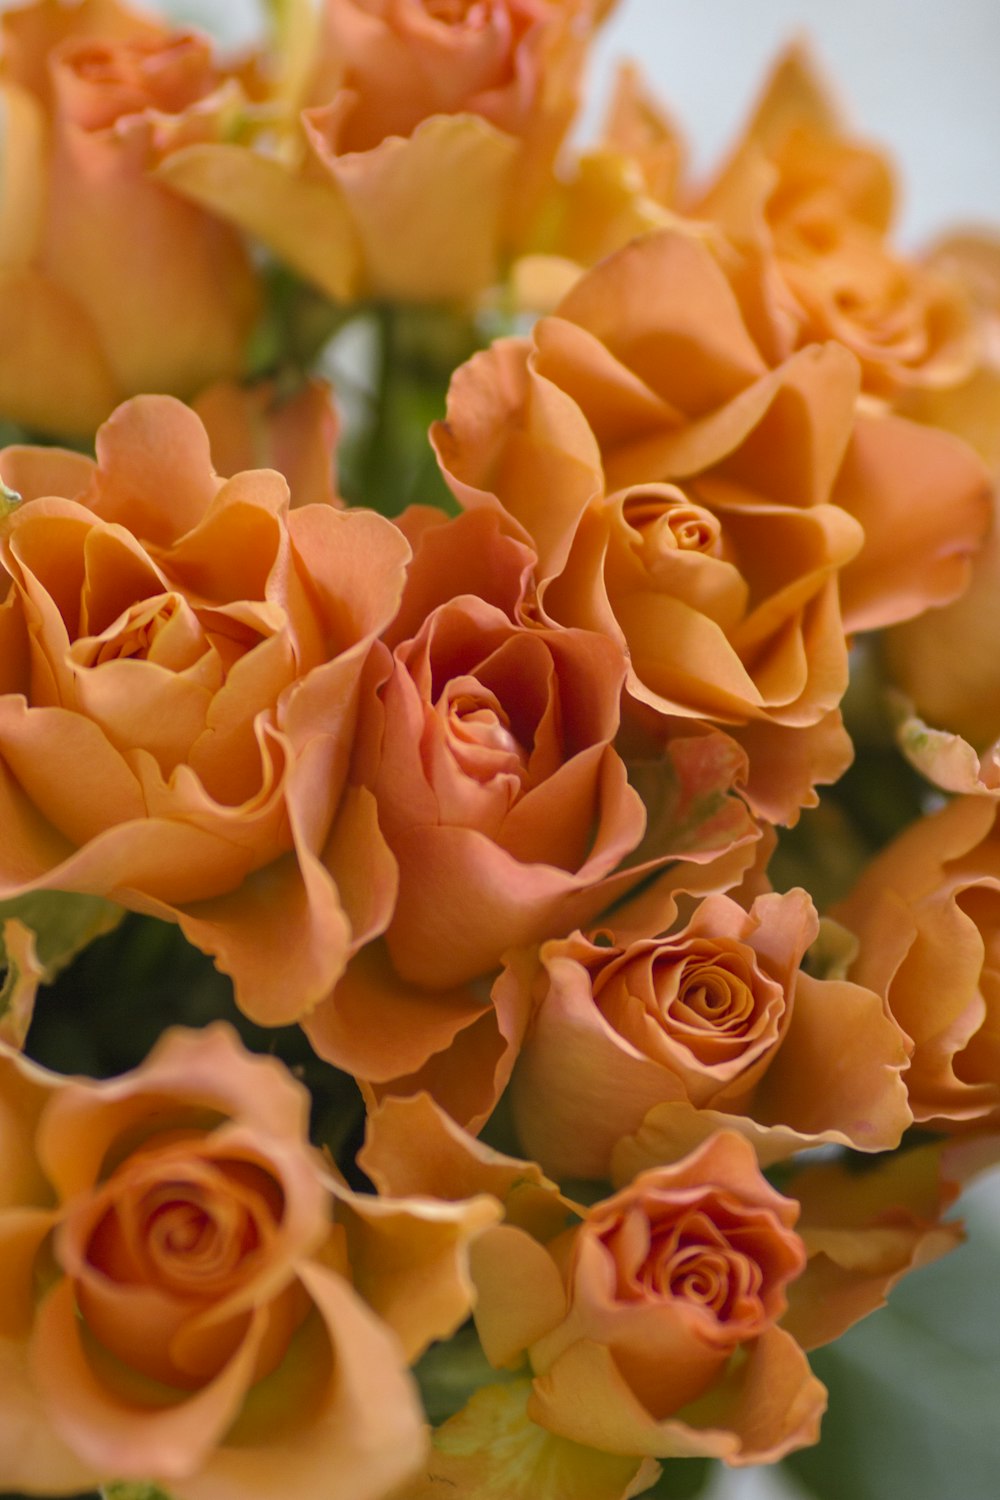 Orange Flowers Pictures | Download Free Images on Unsplash